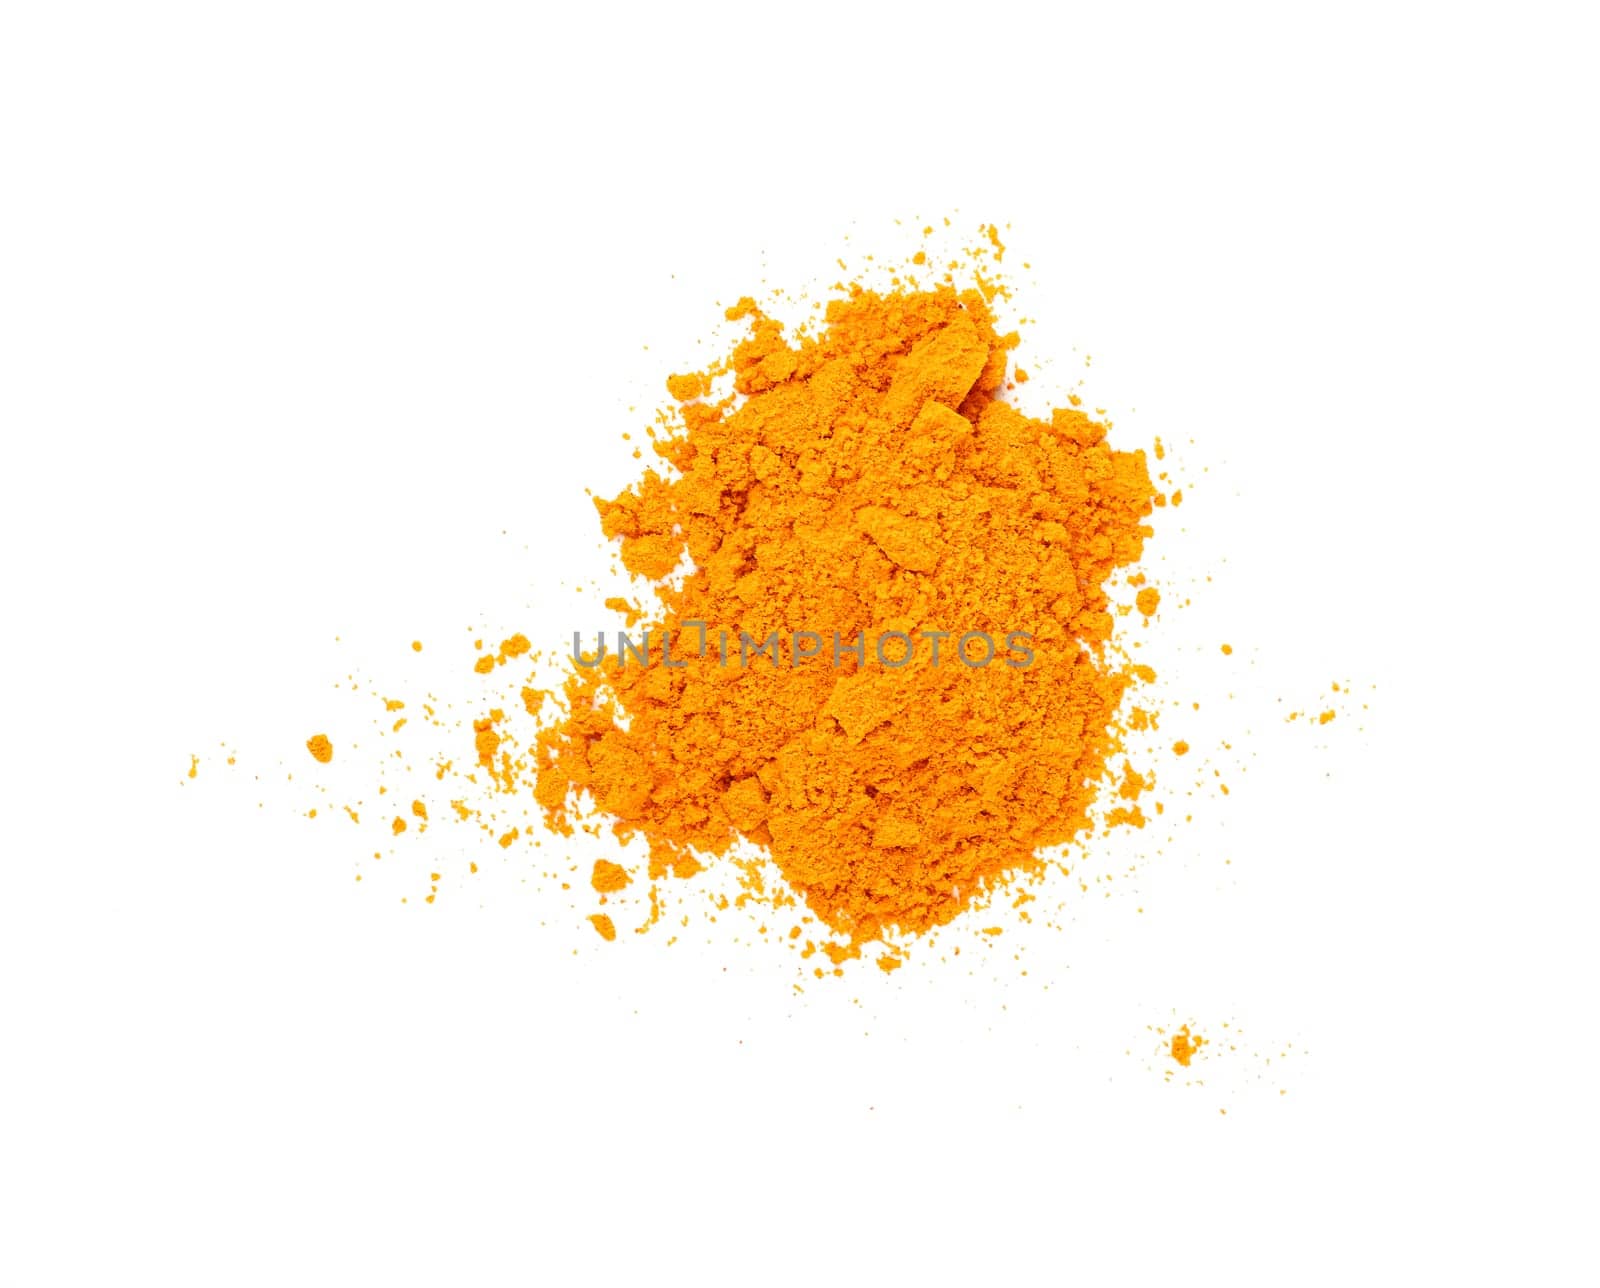 Heap of dried yellow turmeric powder by BreakingTheWalls